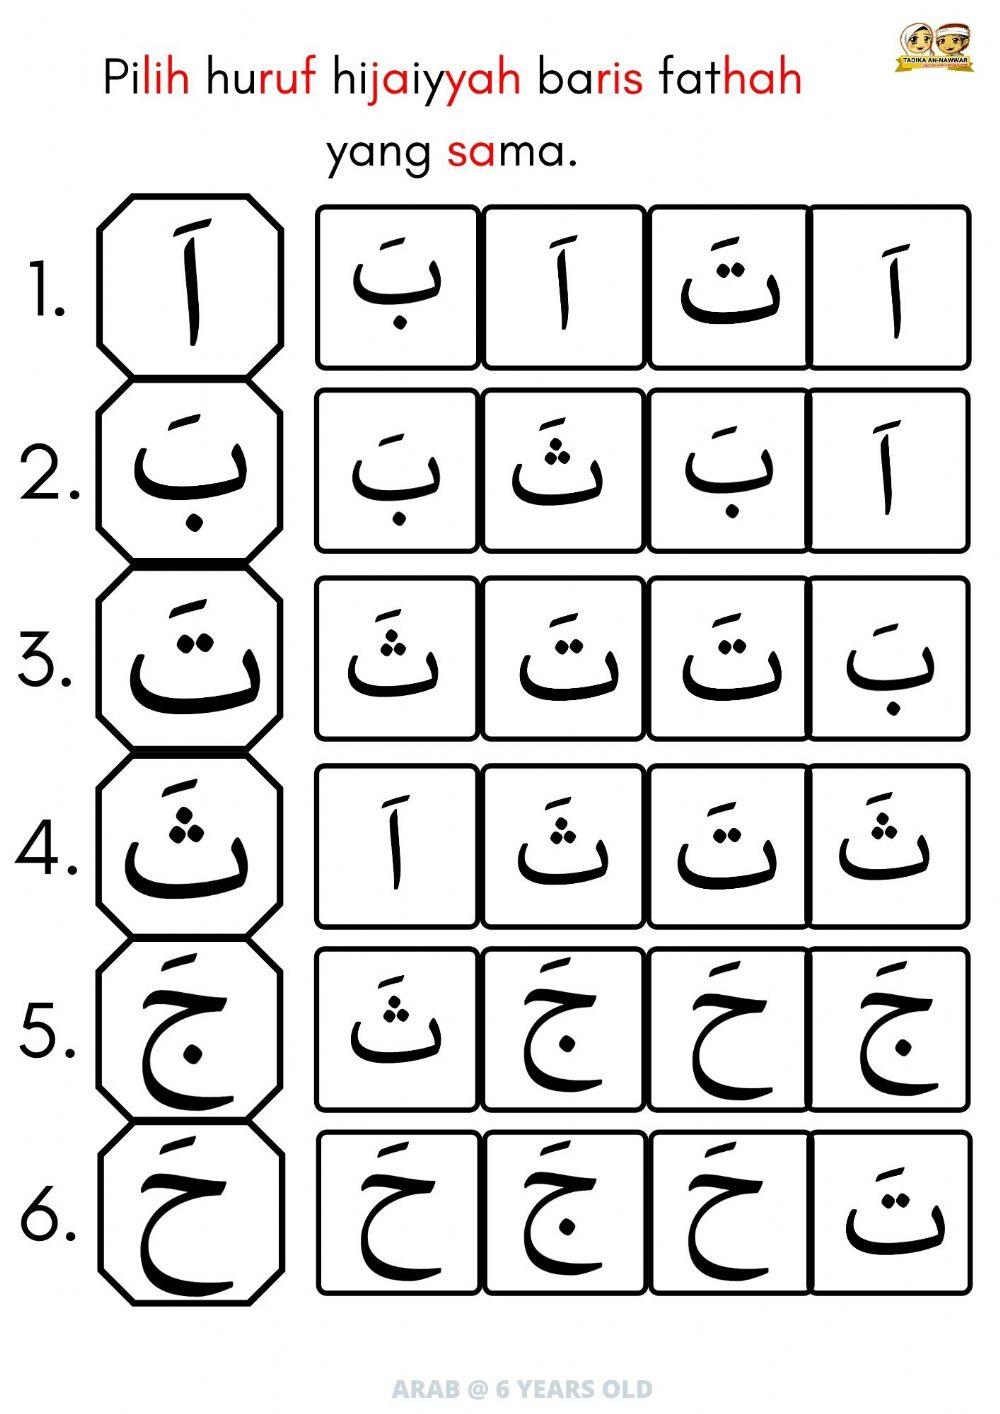 ARAB : Mengenal Huruf Hijaiyyah Baris Fathah (a,ba,ta,tha,ha,kho)